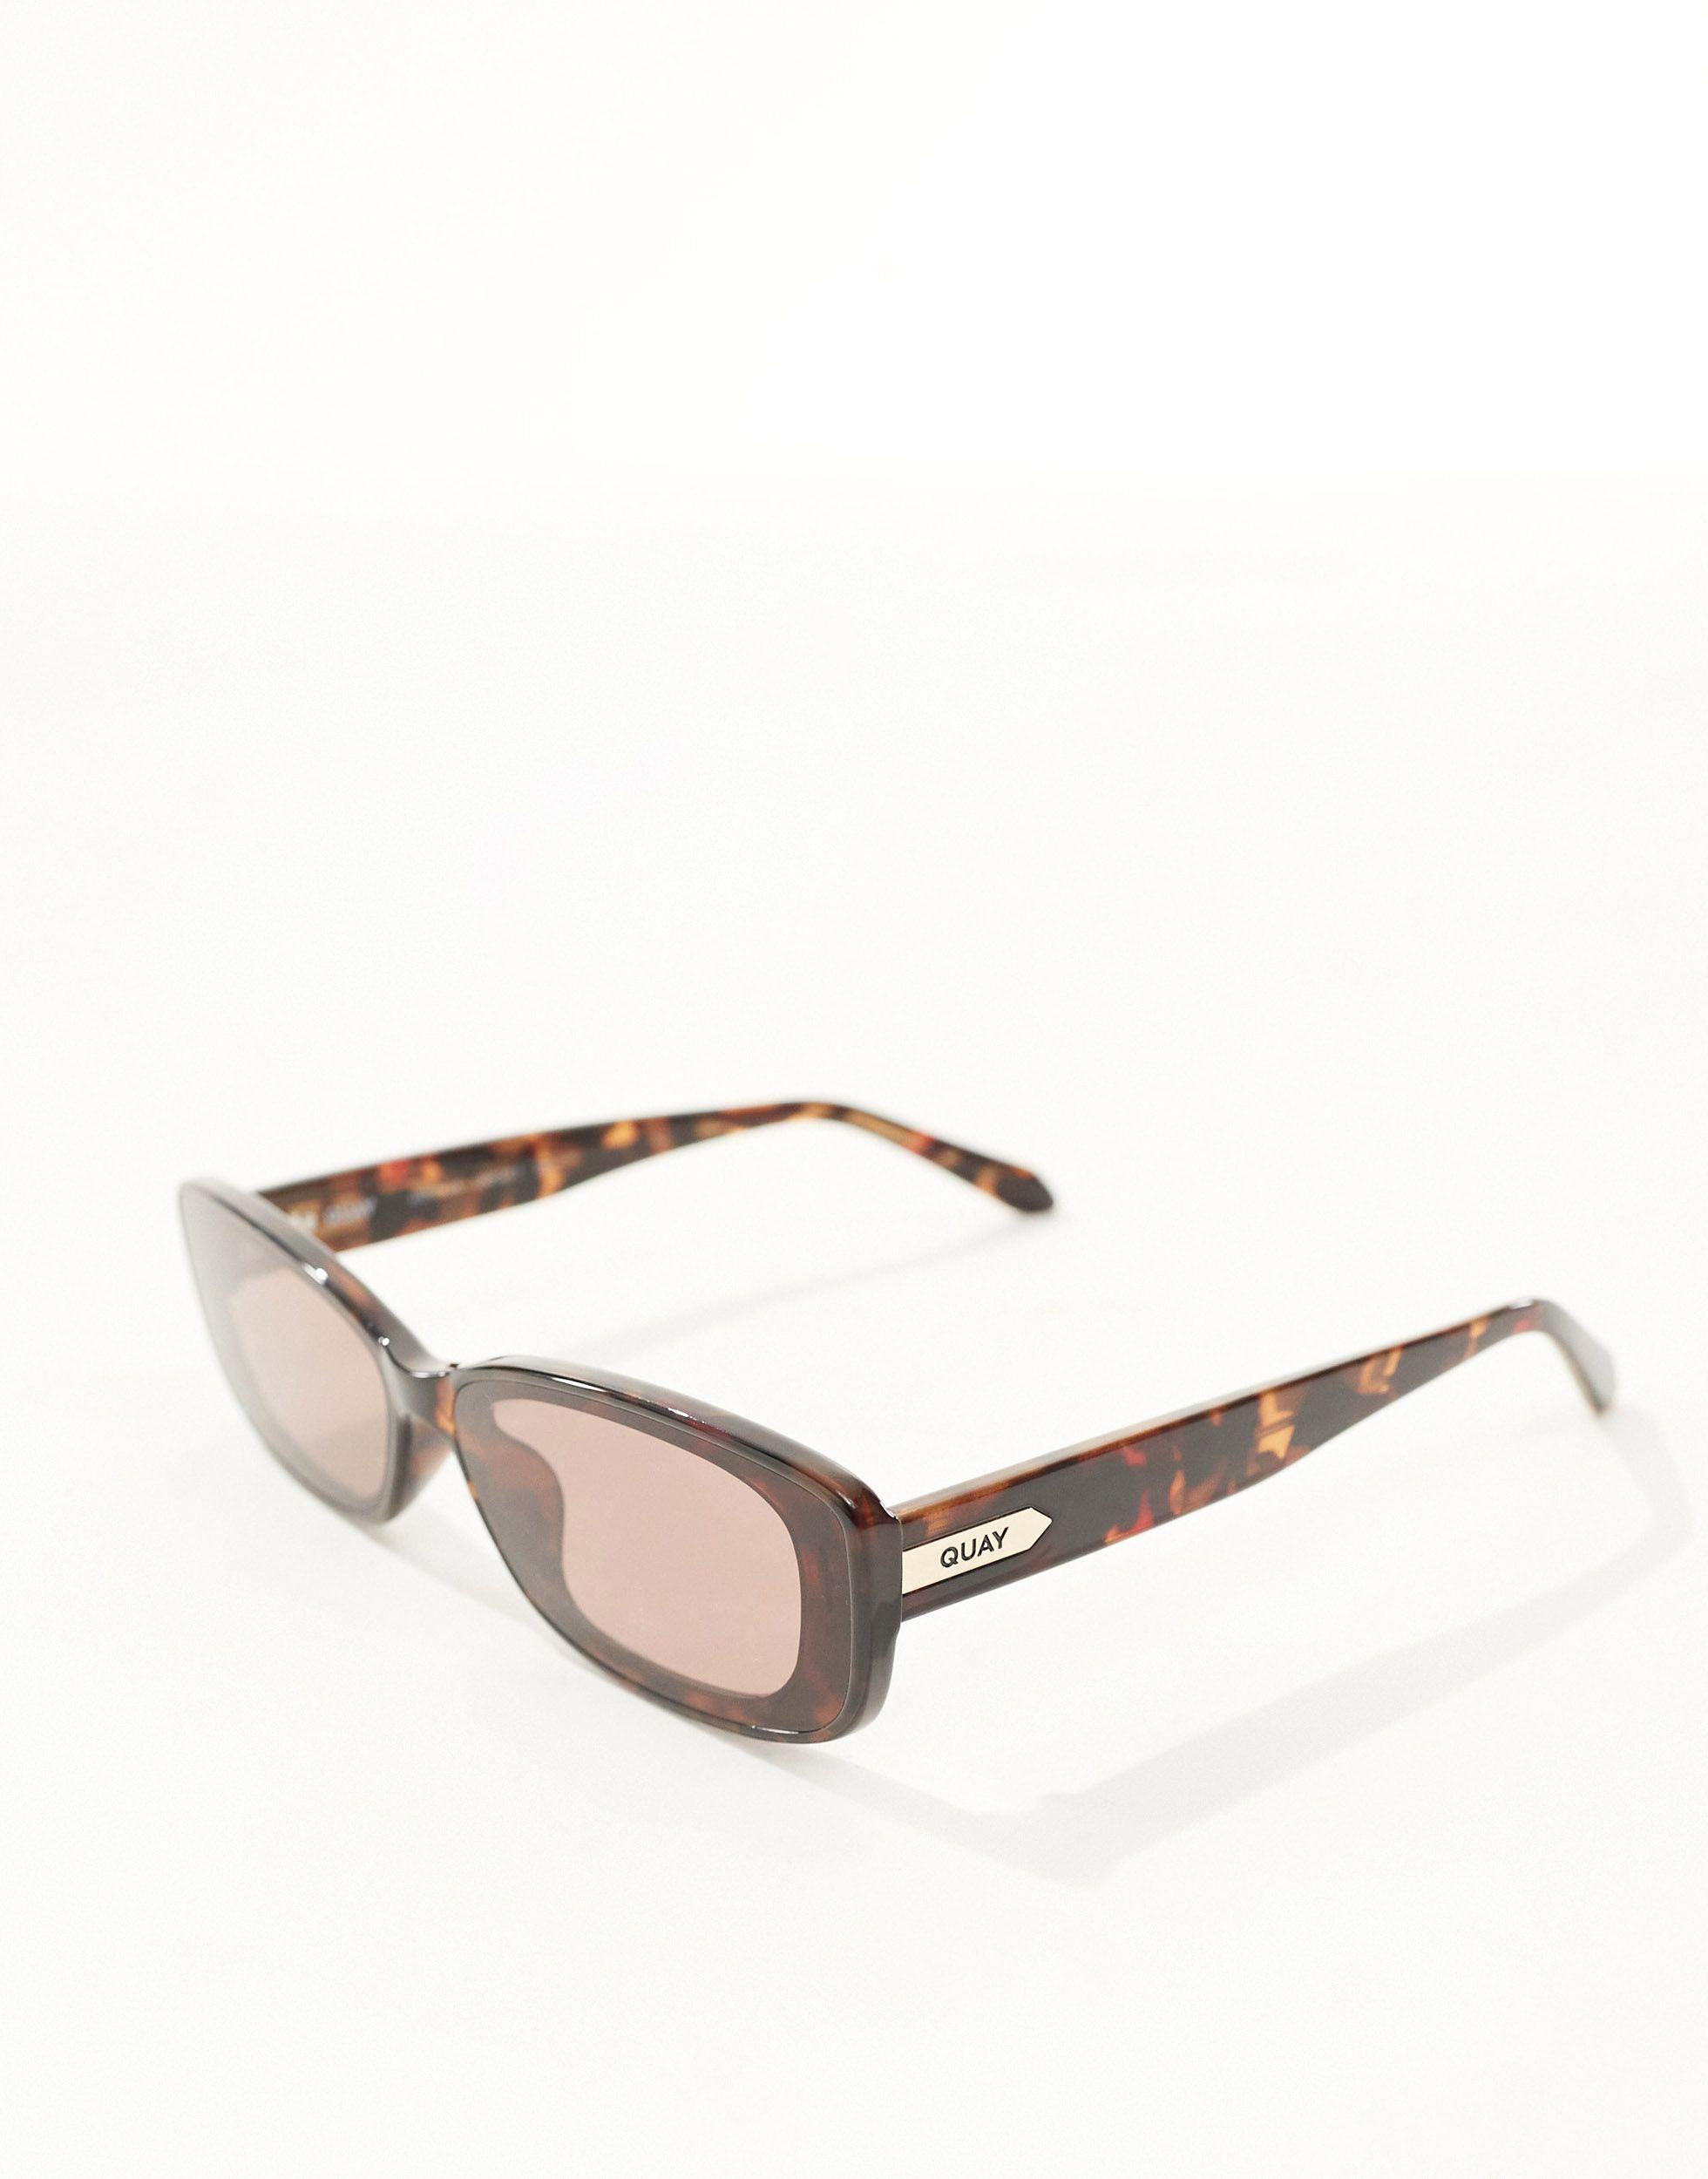 Quay No Envy rectangular sunglasses in caramel-Neutral | Recommend